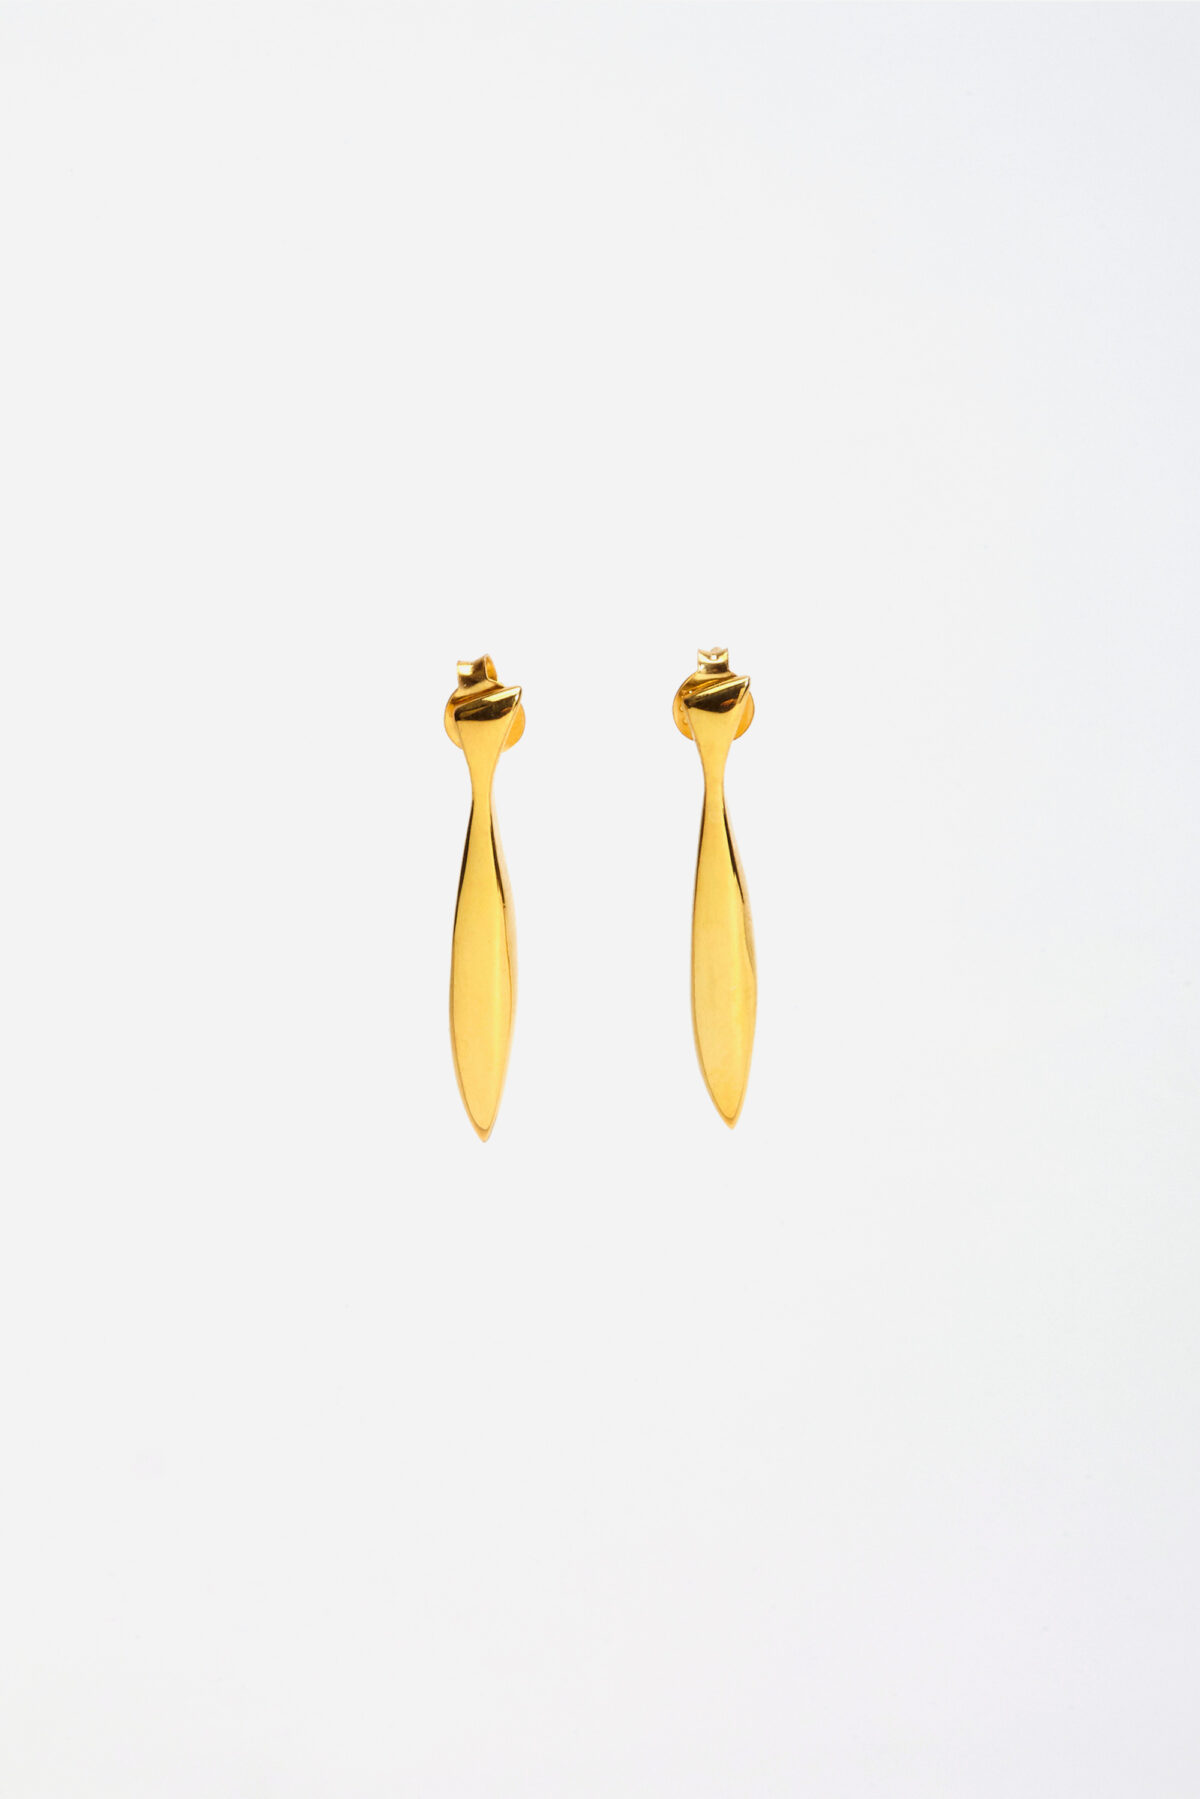 wae-gp-small-earrings-fish-gold-plated-kimale-matchboxathens